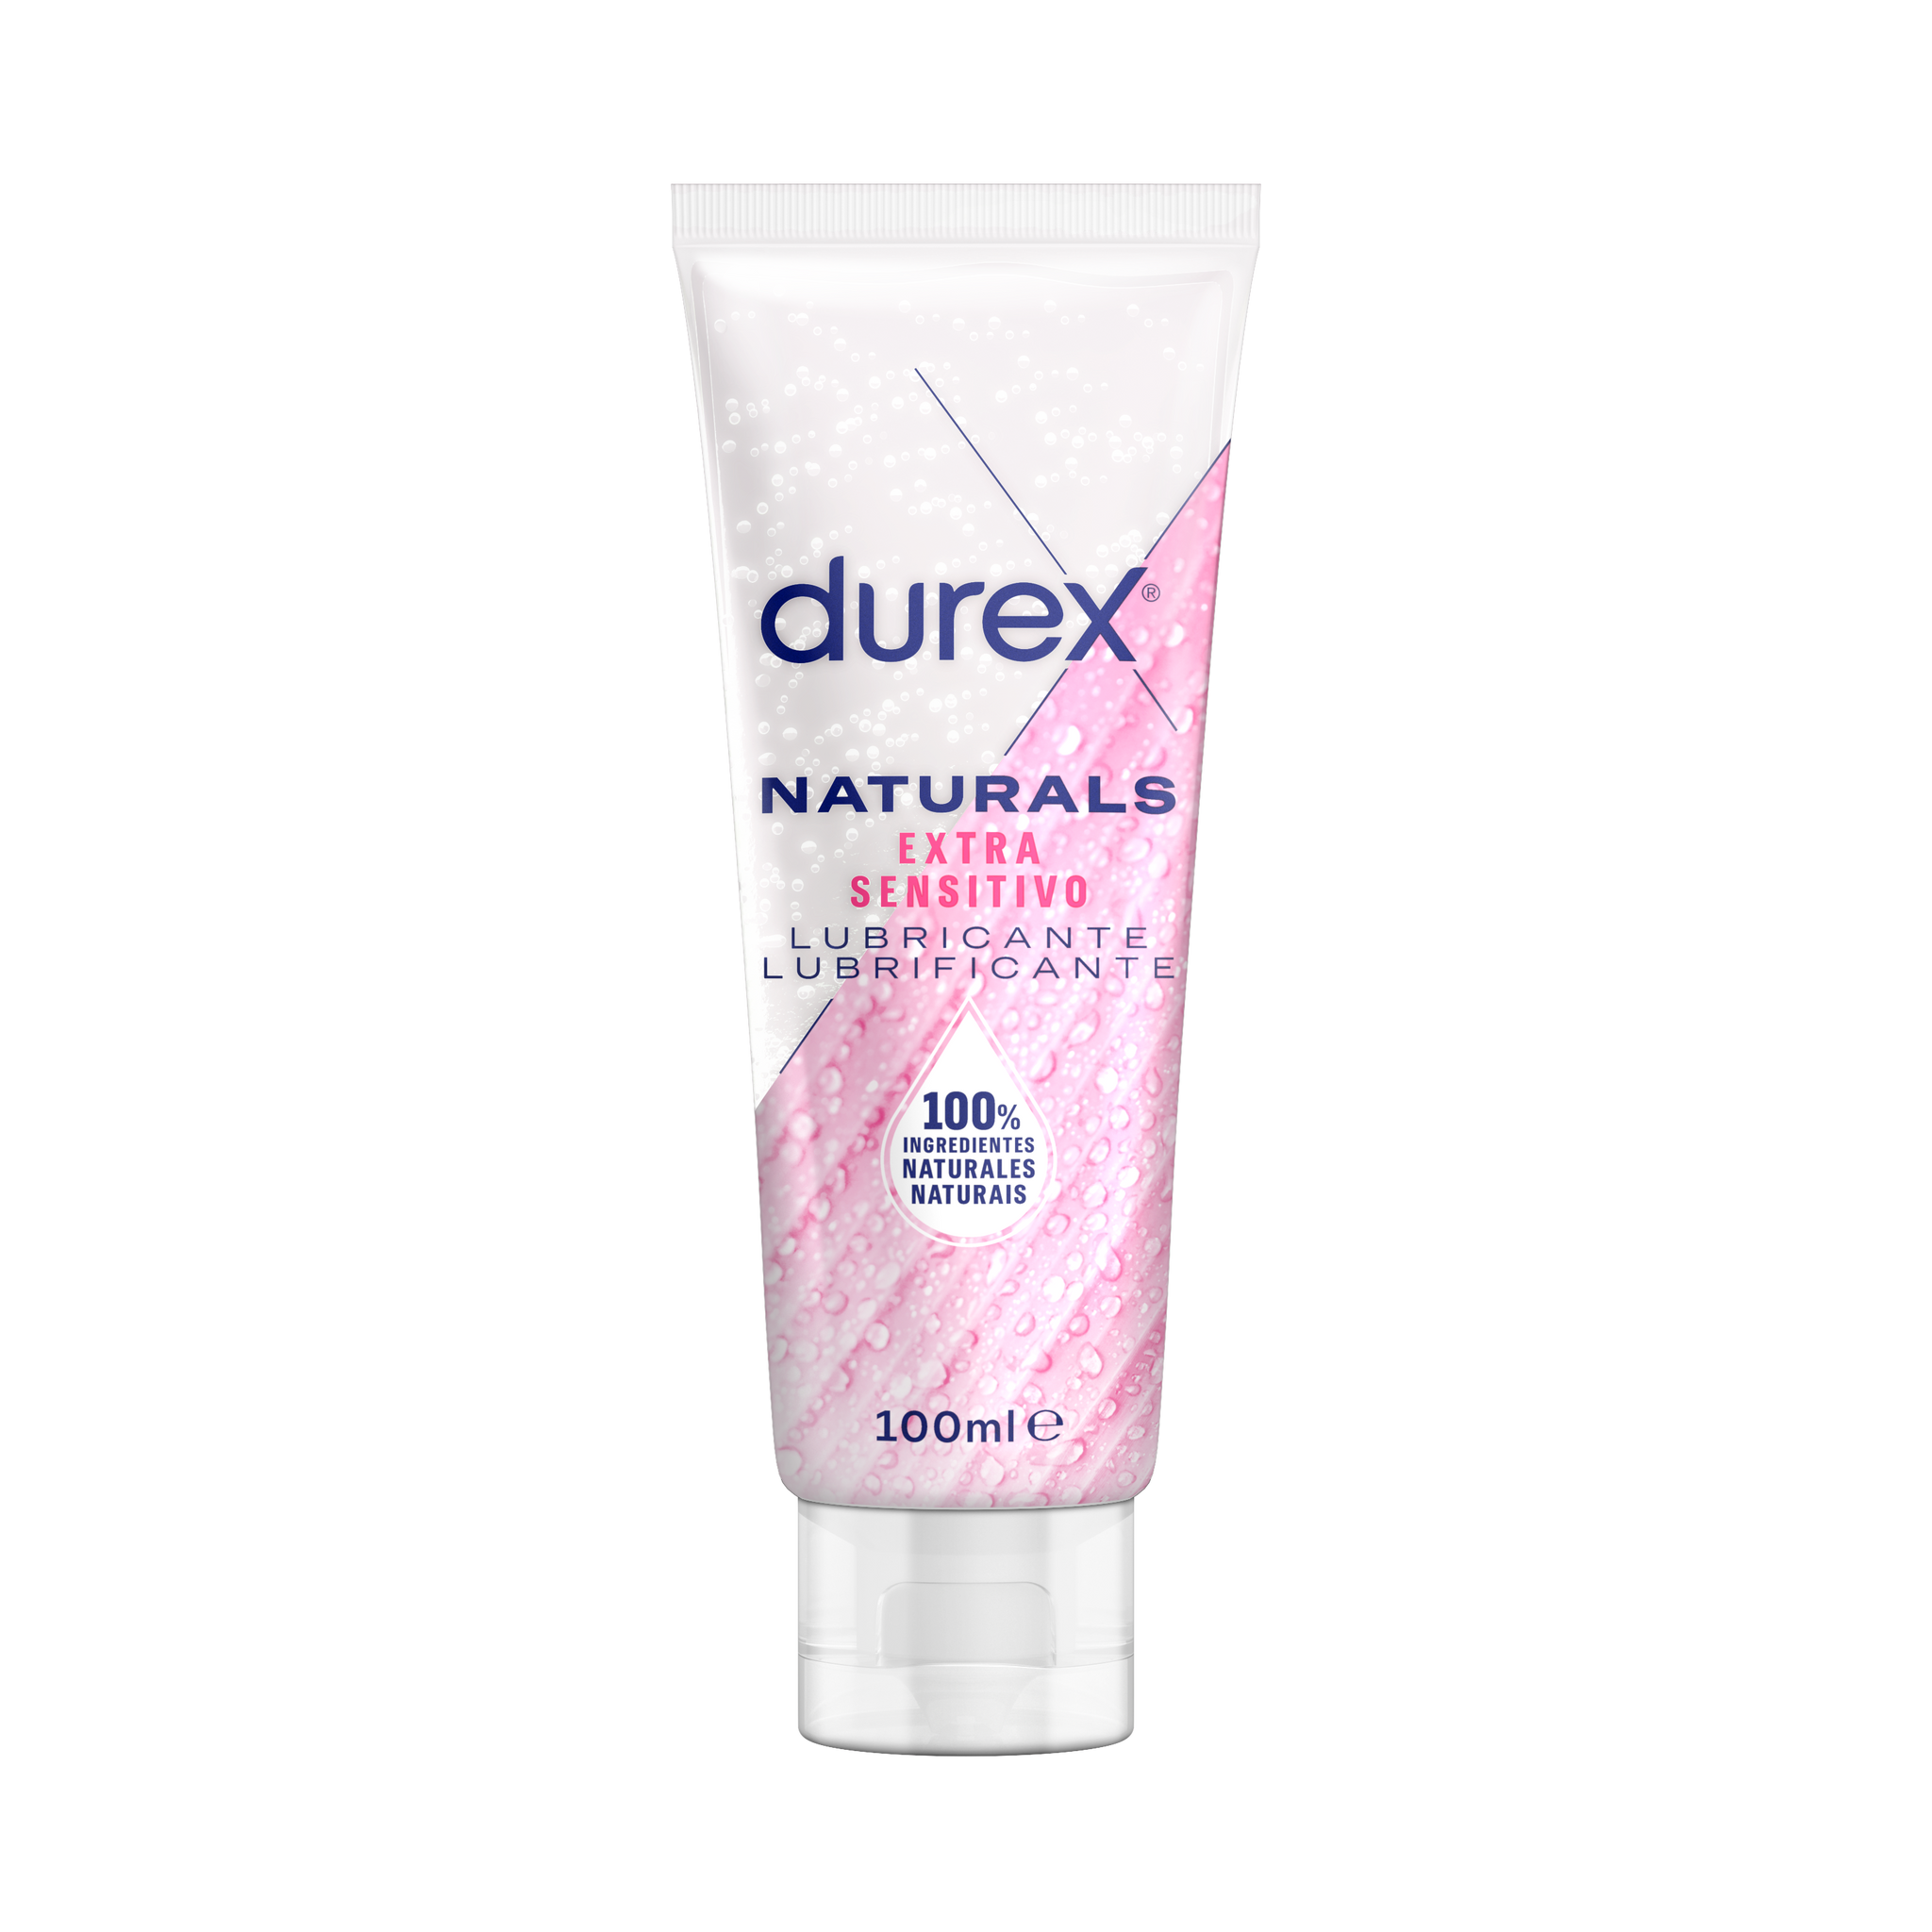 Durex ES Pleasure Gels Durex Naturals Lubricante Extra Sensitivo 100 ml